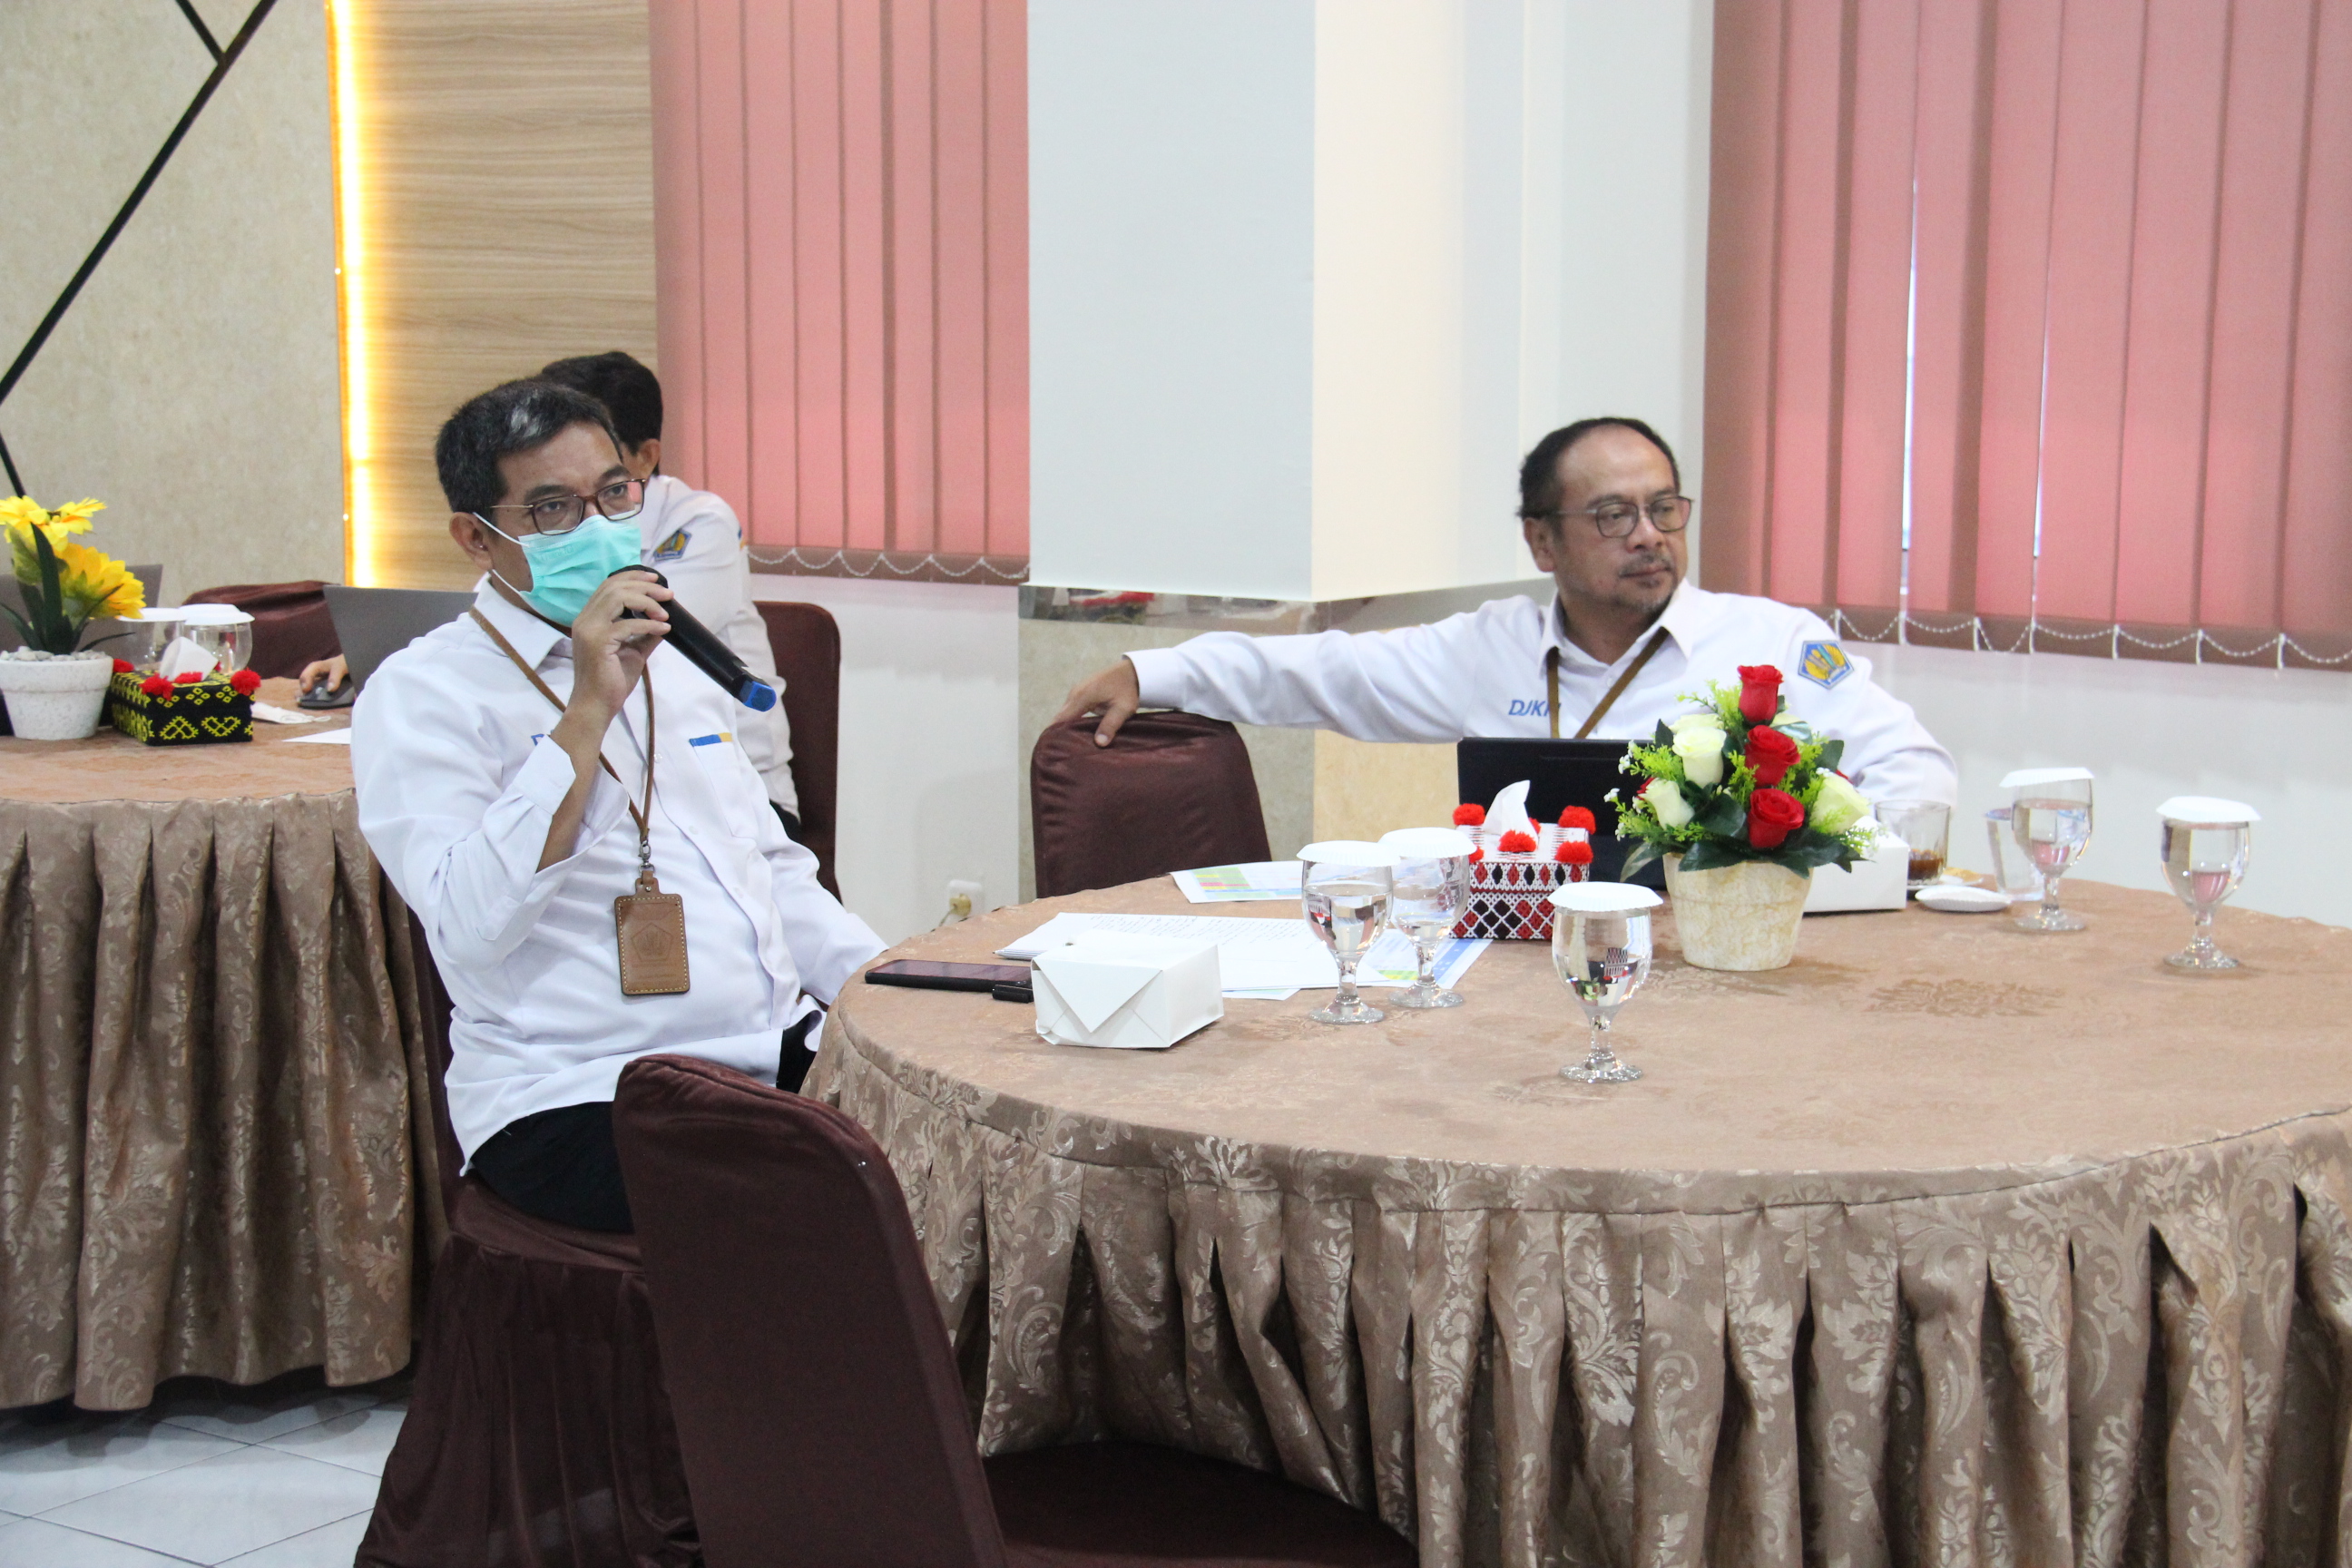 Kanwil DJKN Sumatera Utara adakan Rapat Dialog Kinerja Organisasi (DKO) Triwulan III tahun 2022